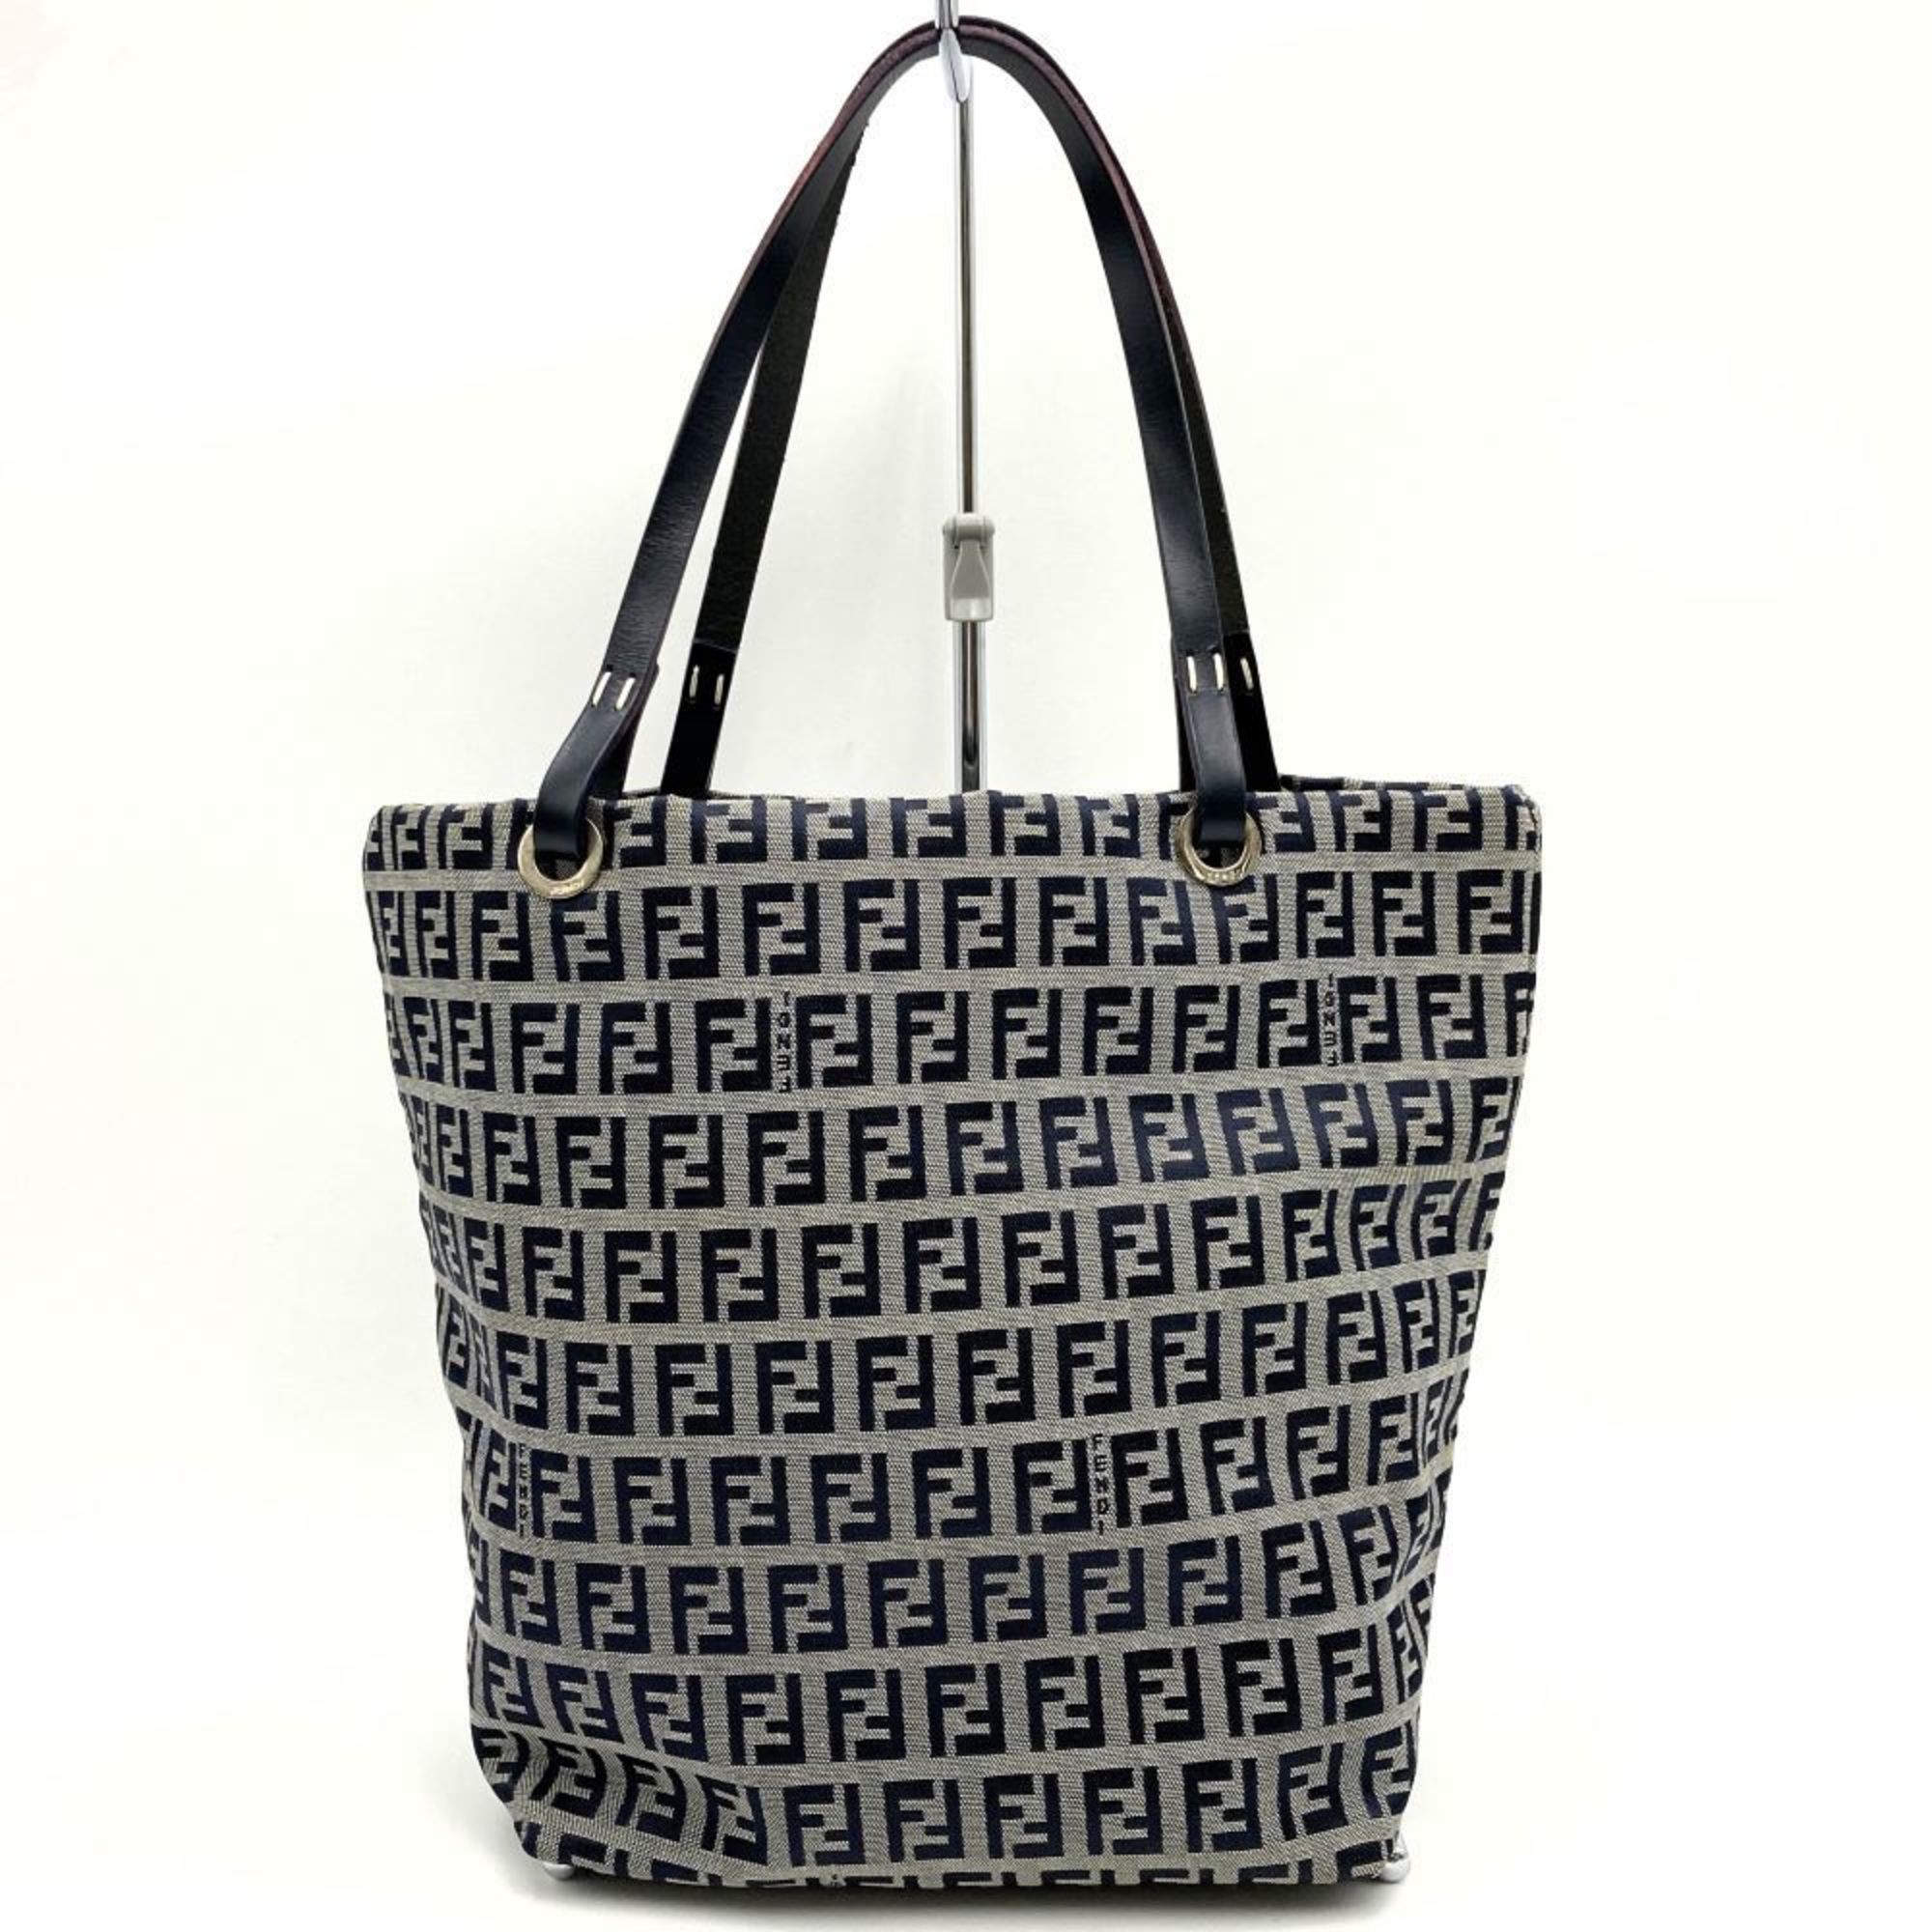 FENDI handbag zucchino pattern navy canvas leather women's